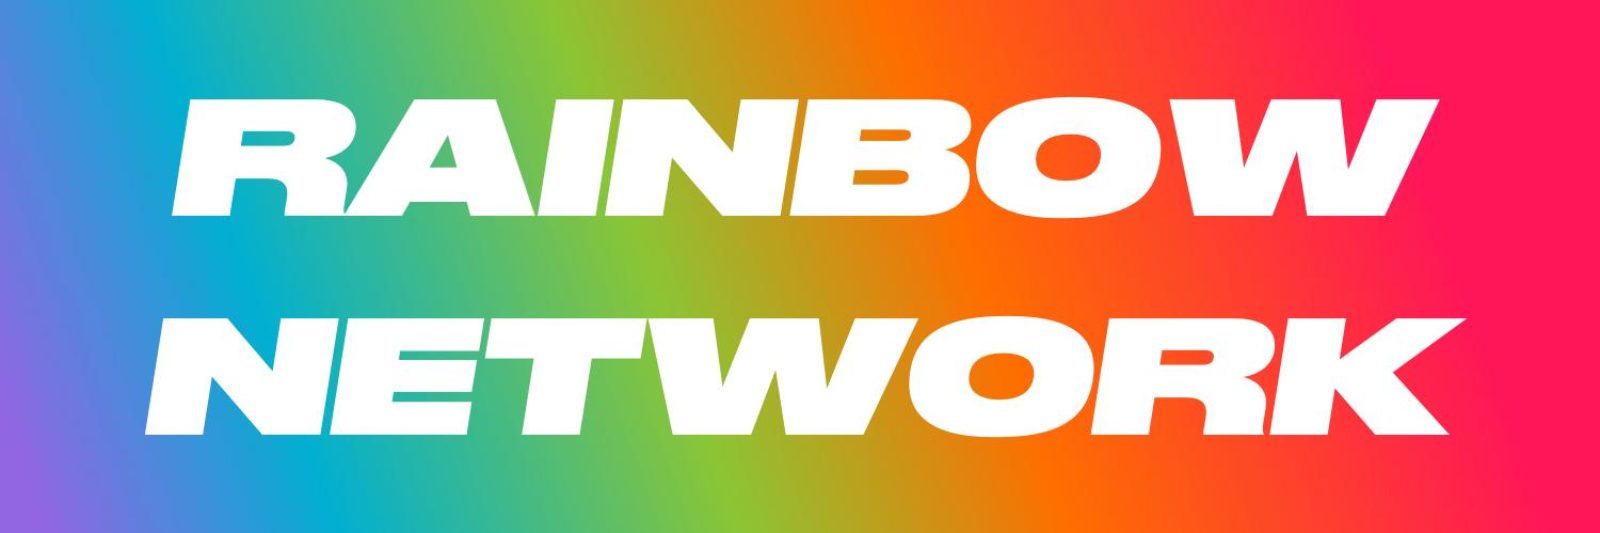 Rainbow Network